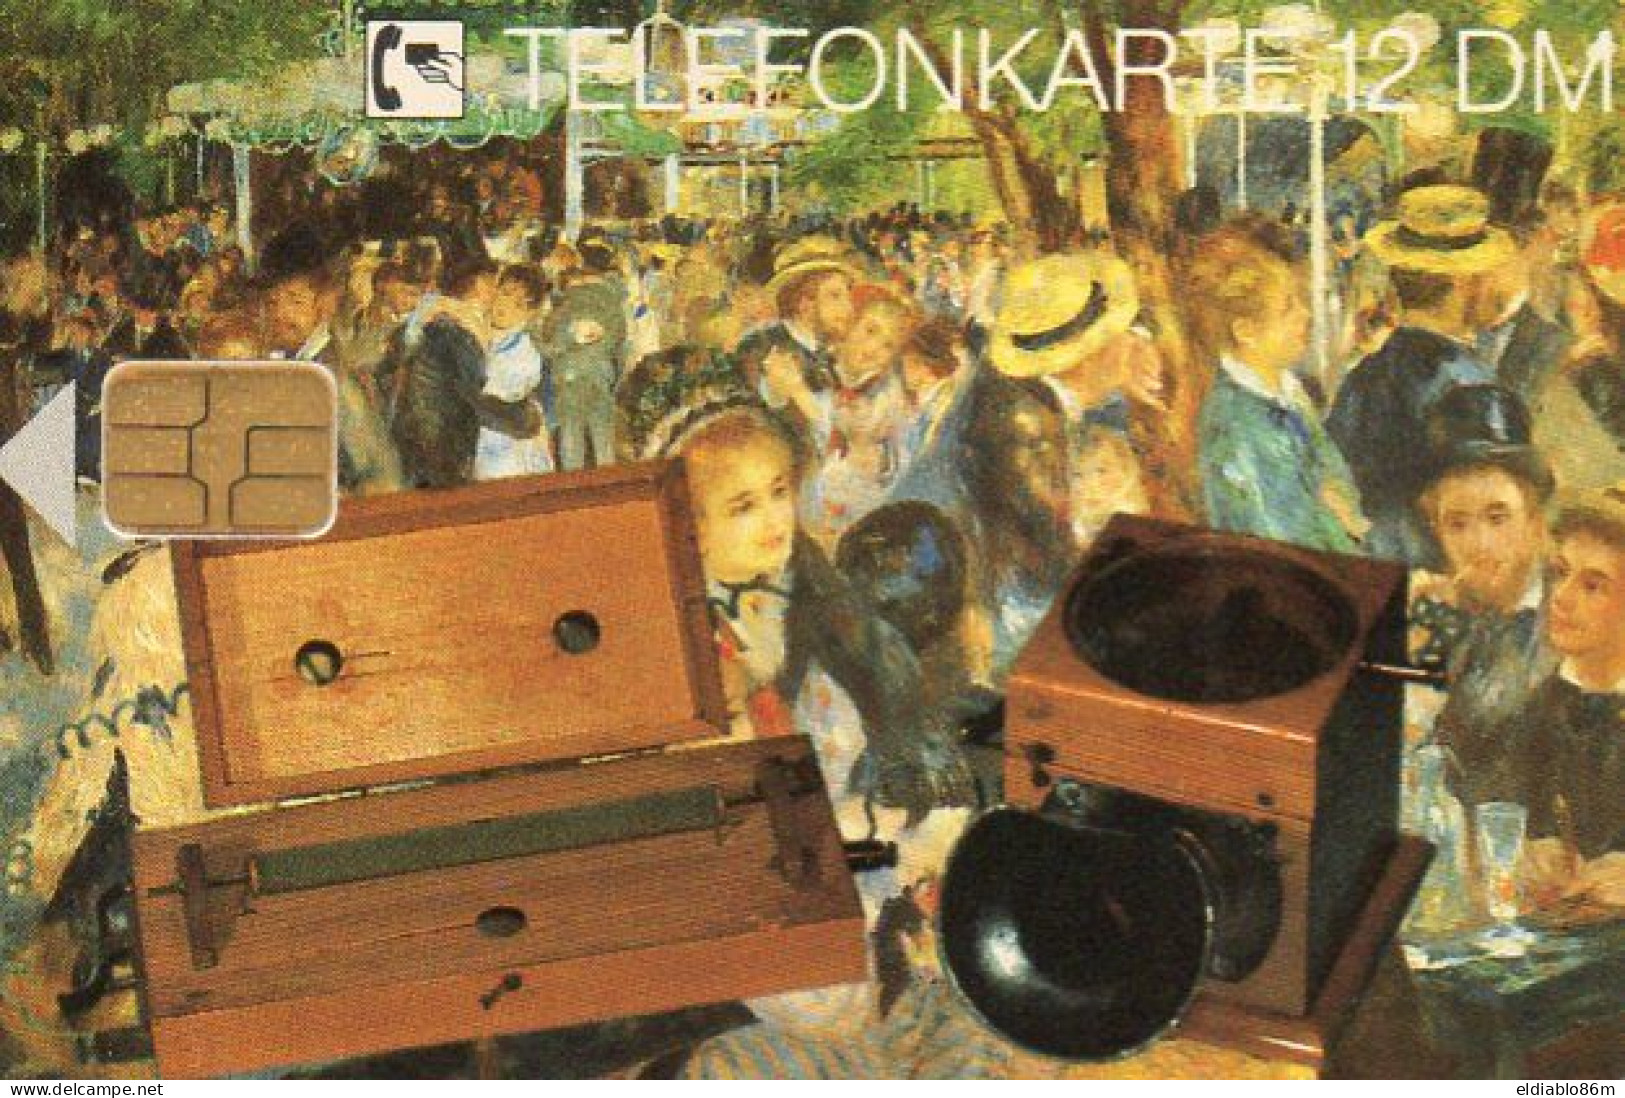 GERMANY - CHIP CARD - E 05 08.92 - ALTE TELEFONAPPARATE - TELEFON VON JOHAN P. REIS (1208) - TELEPHONE - E-Series: Editionsausgabe Der Dt. Postreklame